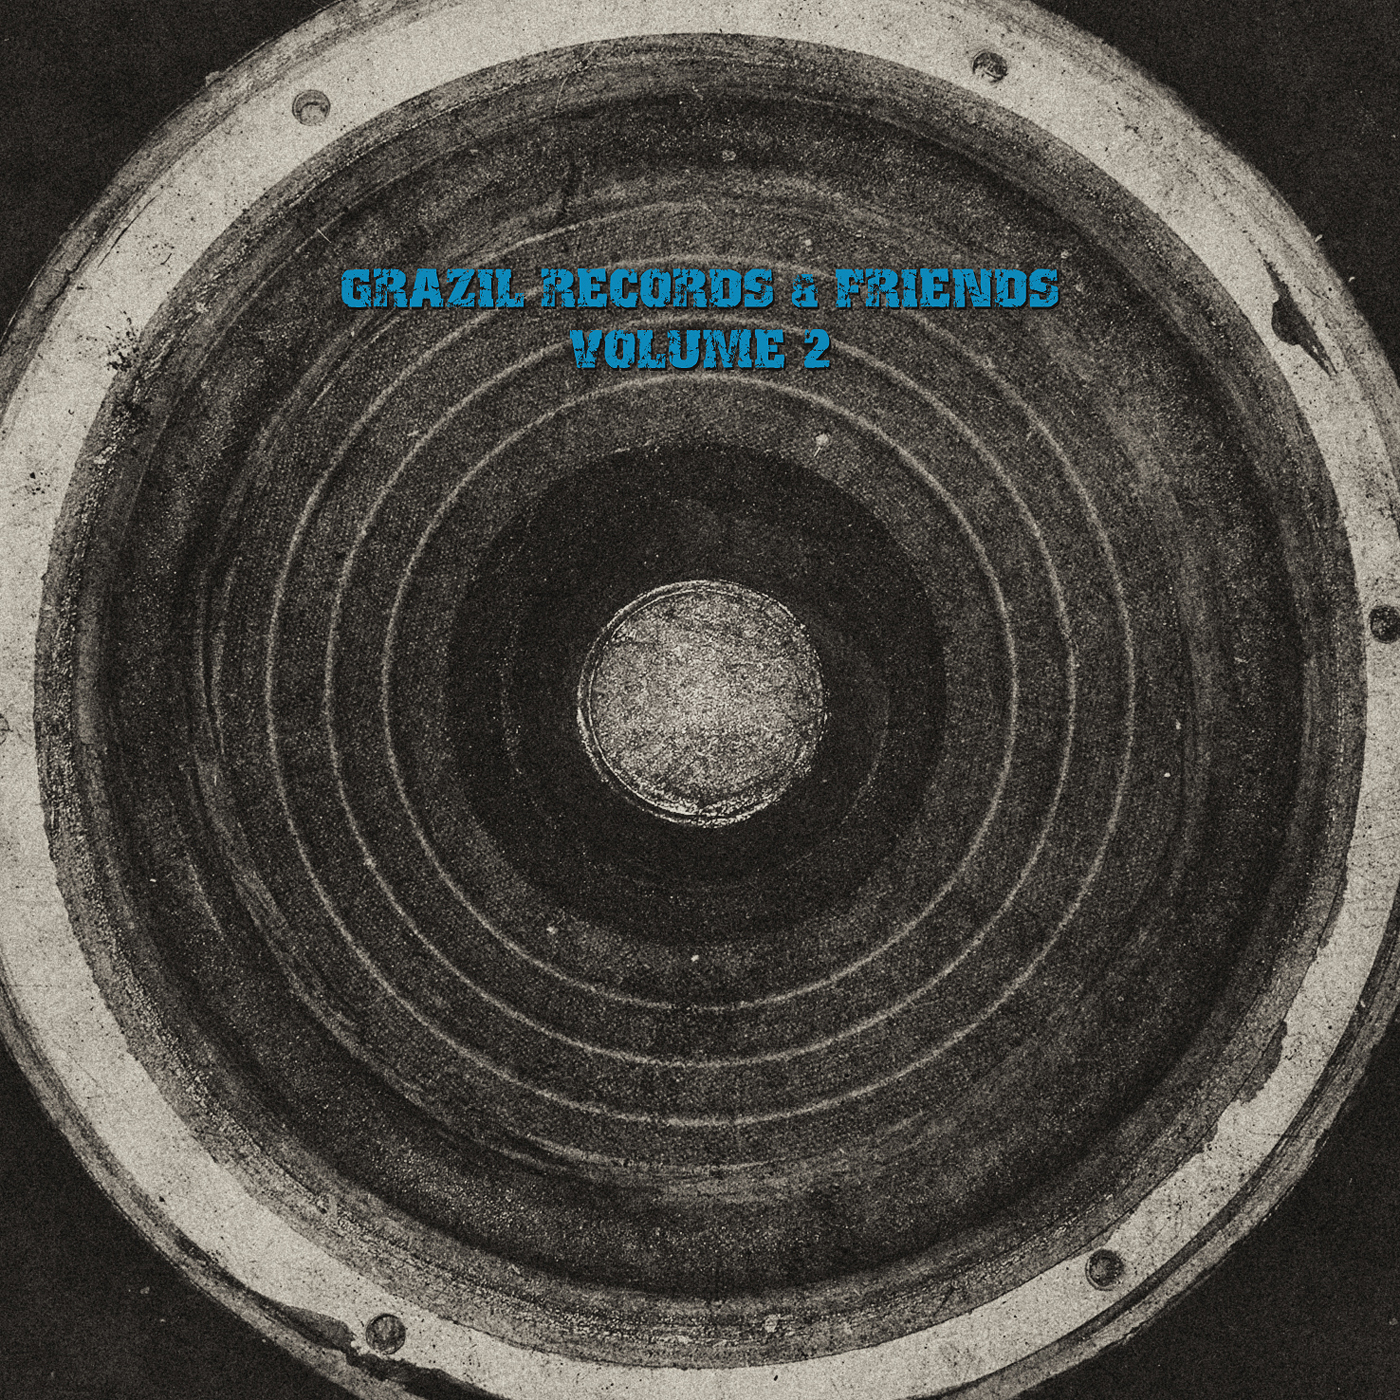 grazil Records & Friends Volume 2